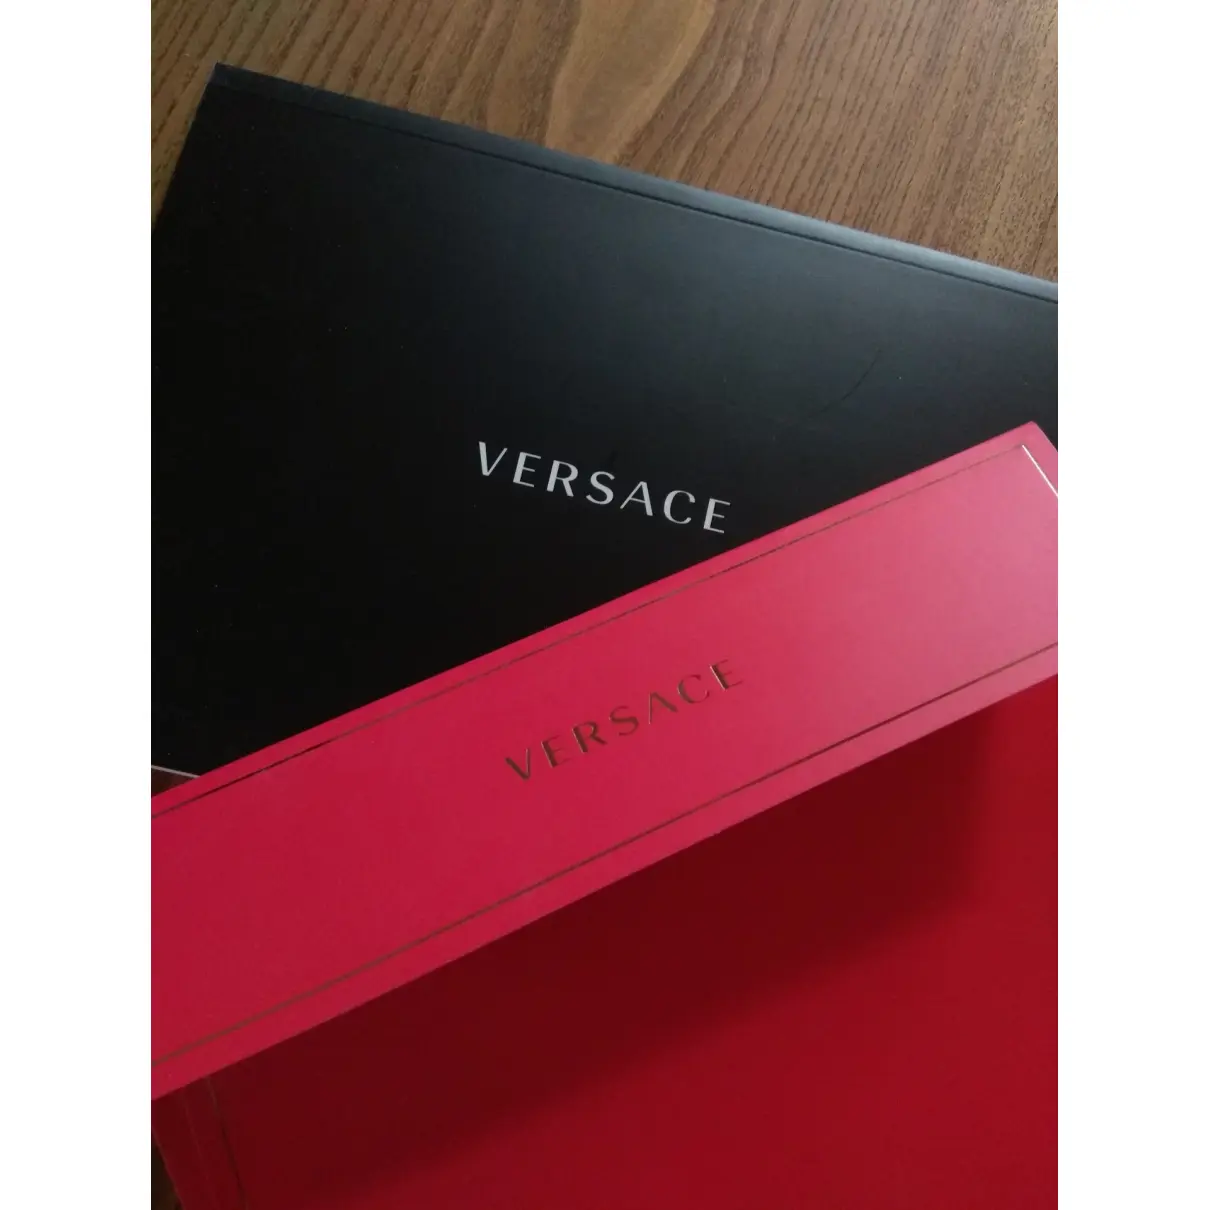 Buy Versace Fashion online